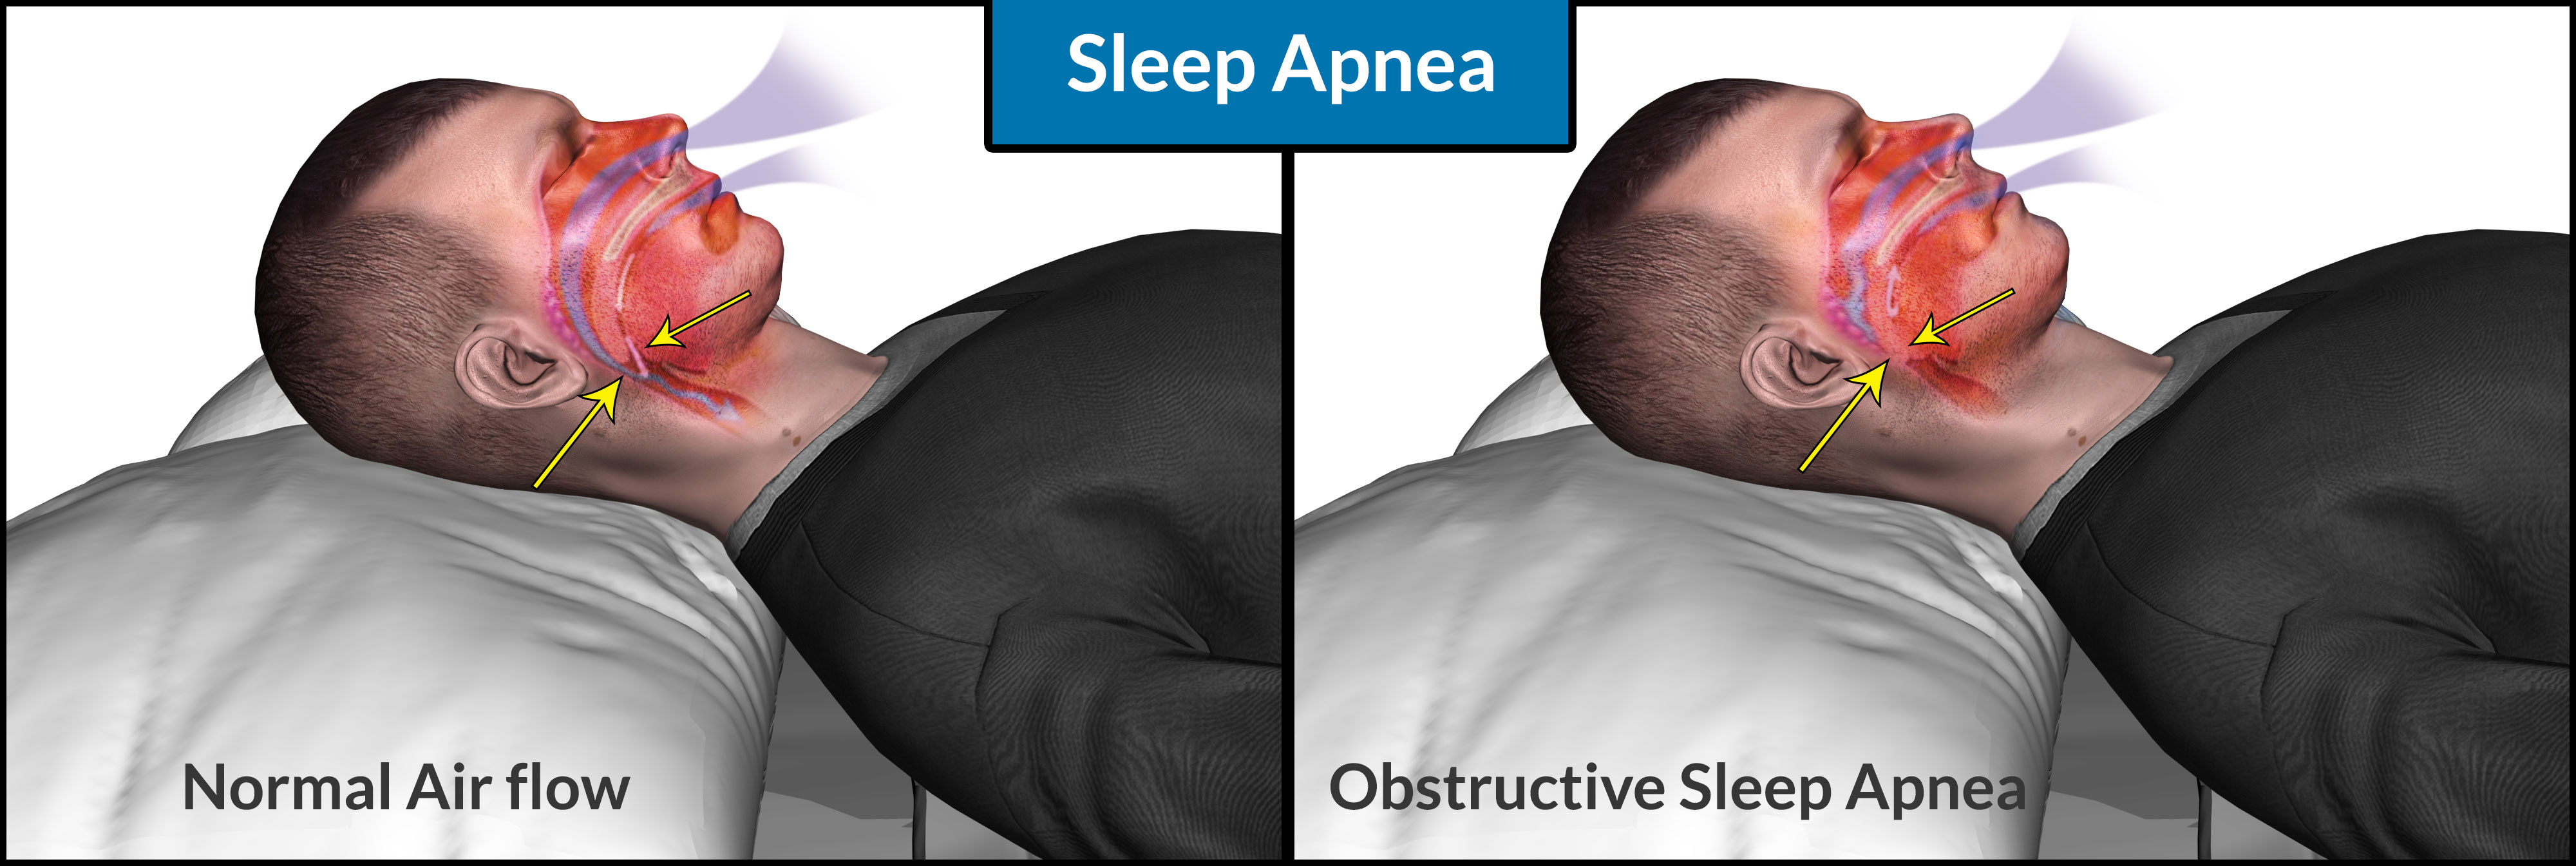 Obstructive Sleep Apnoea Treatment In Pune And Pcmc Mild Sleep Apnea Treatment In Pune And Pcmc